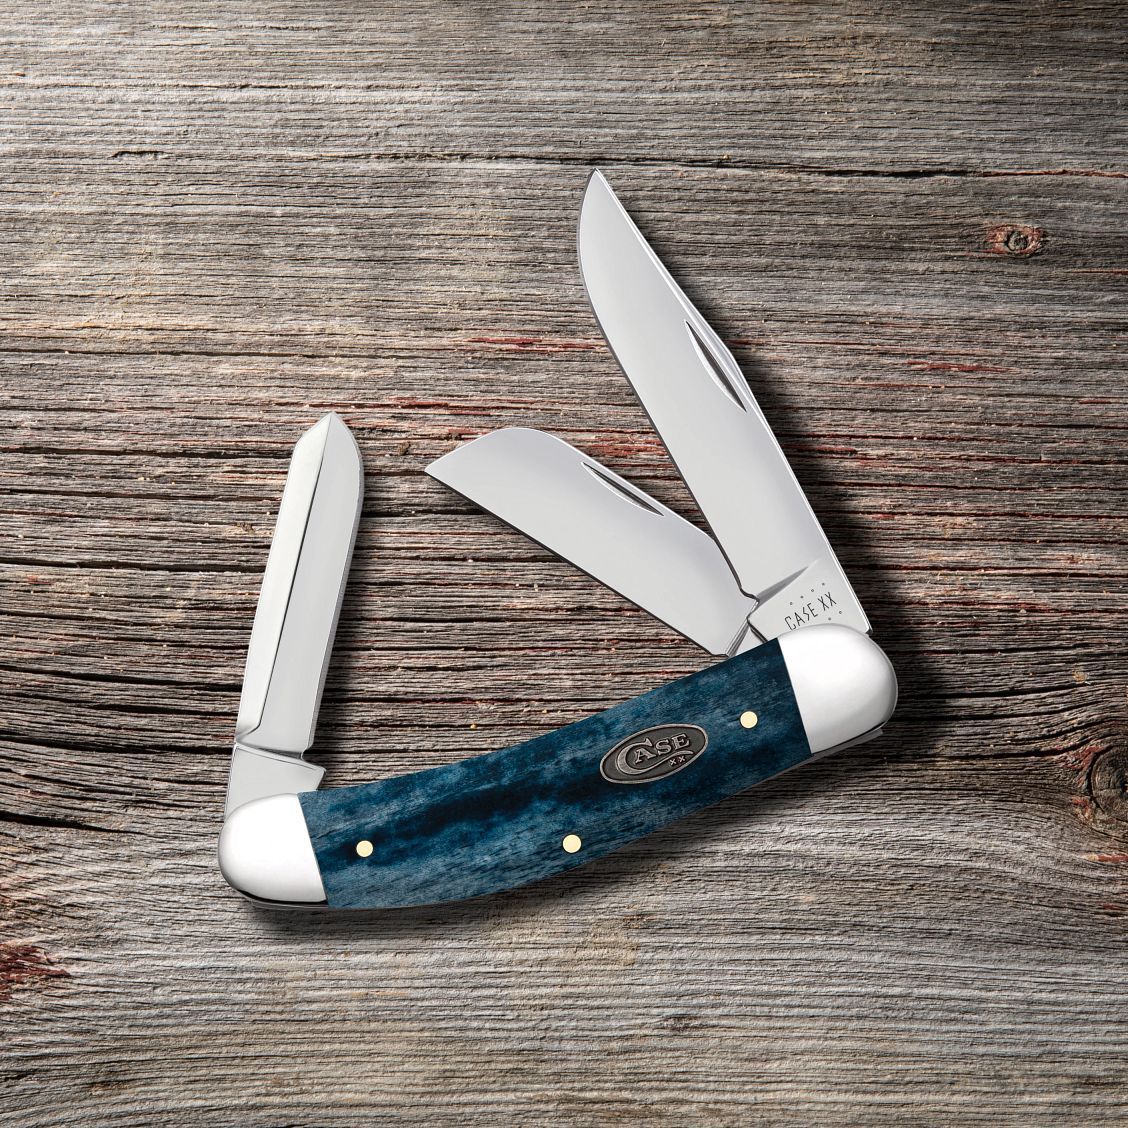 Case Knives: Case Bowie Knife Sheath, CA-50419